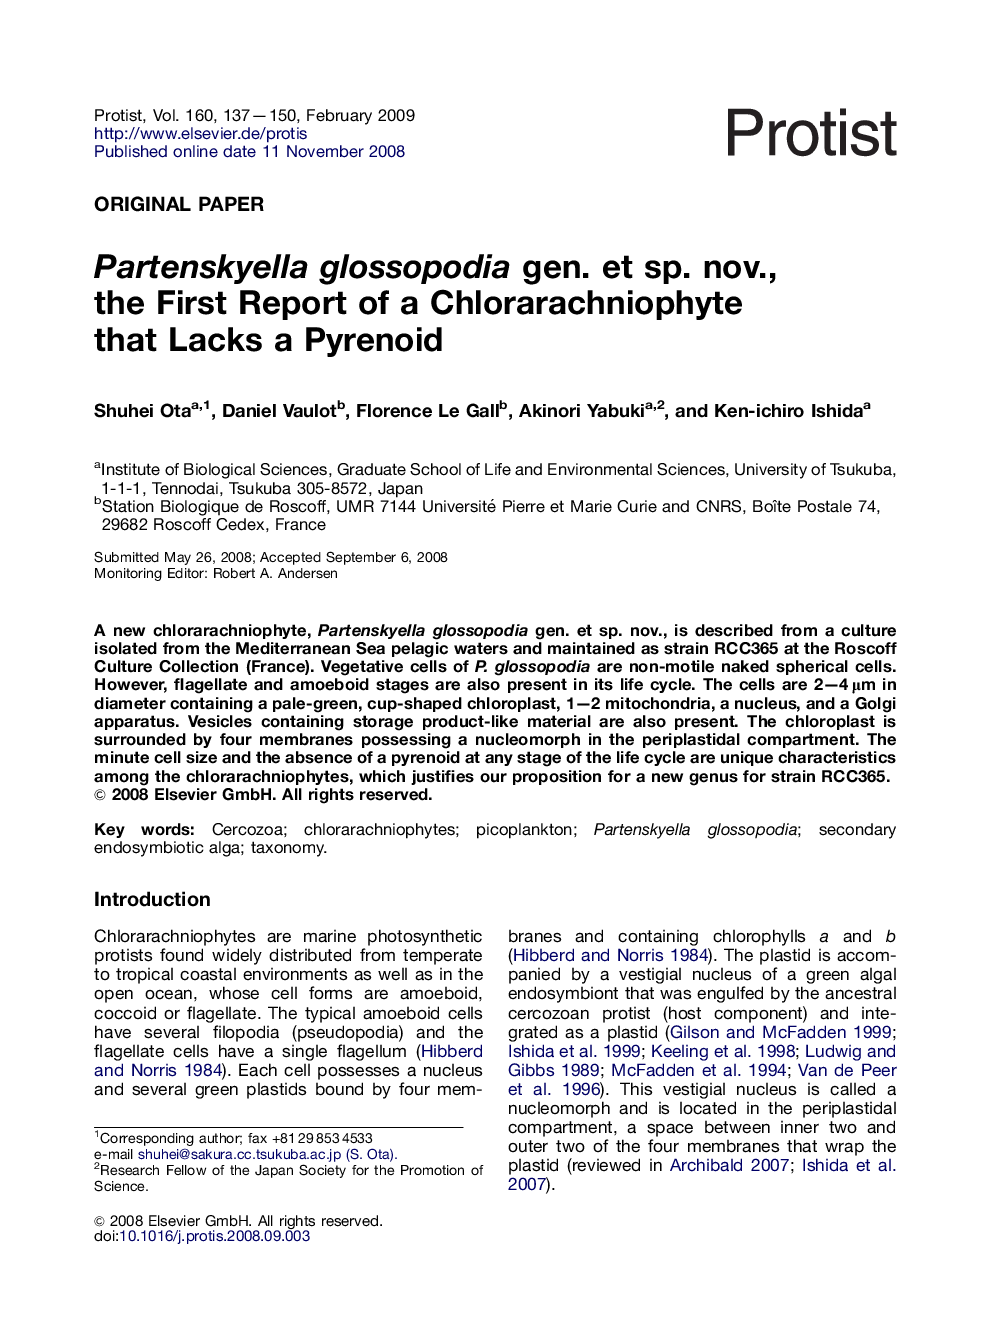 Partenskyella glossopodia gen. et sp. nov., the First Report of a Chlorarachniophyte that Lacks a Pyrenoid